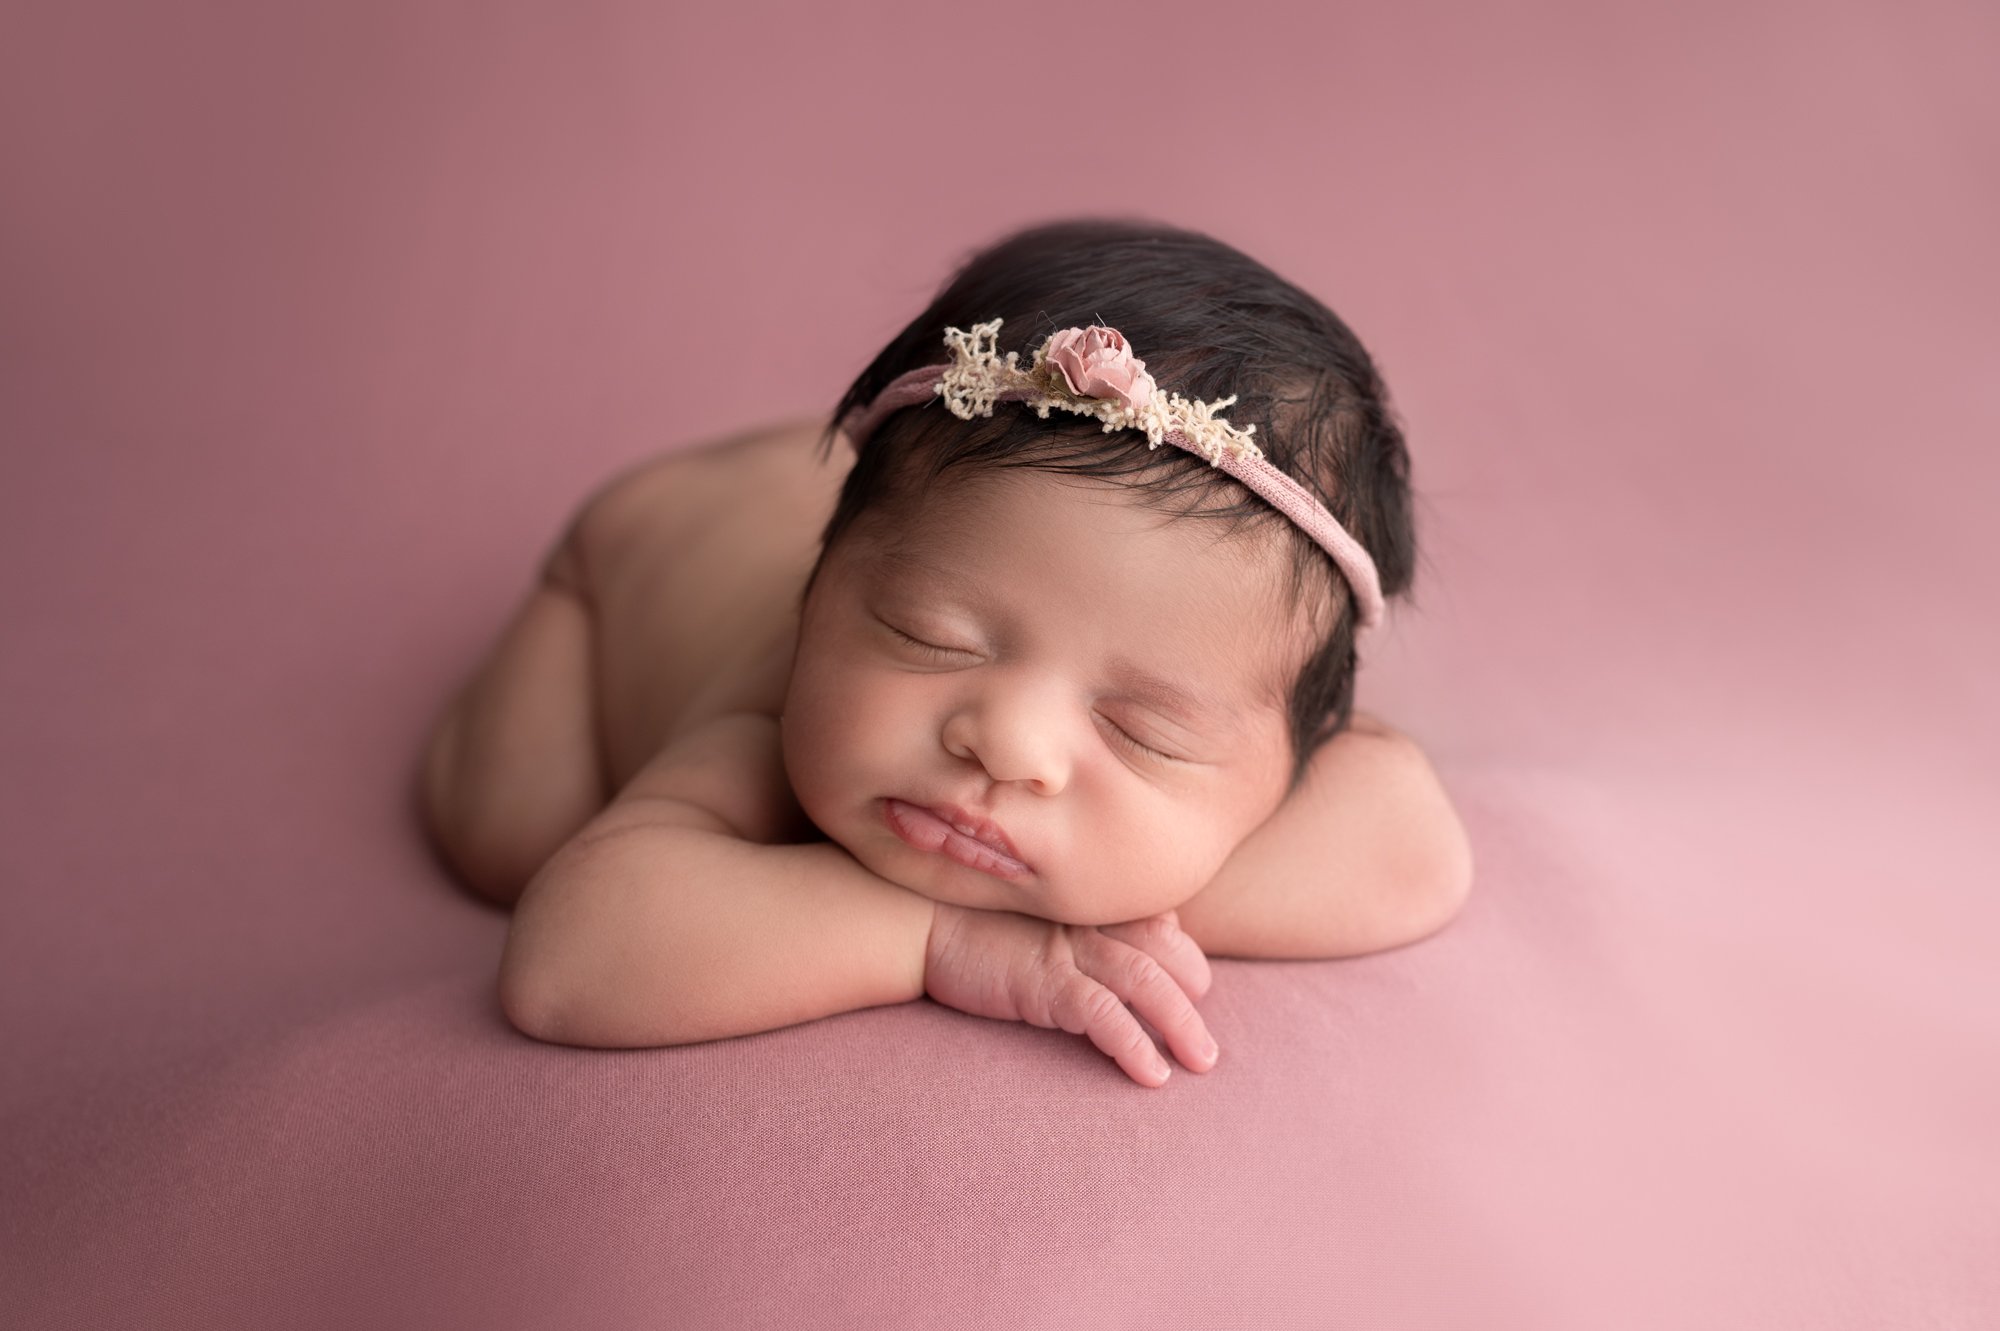 Girl Newborn Photography Image pink